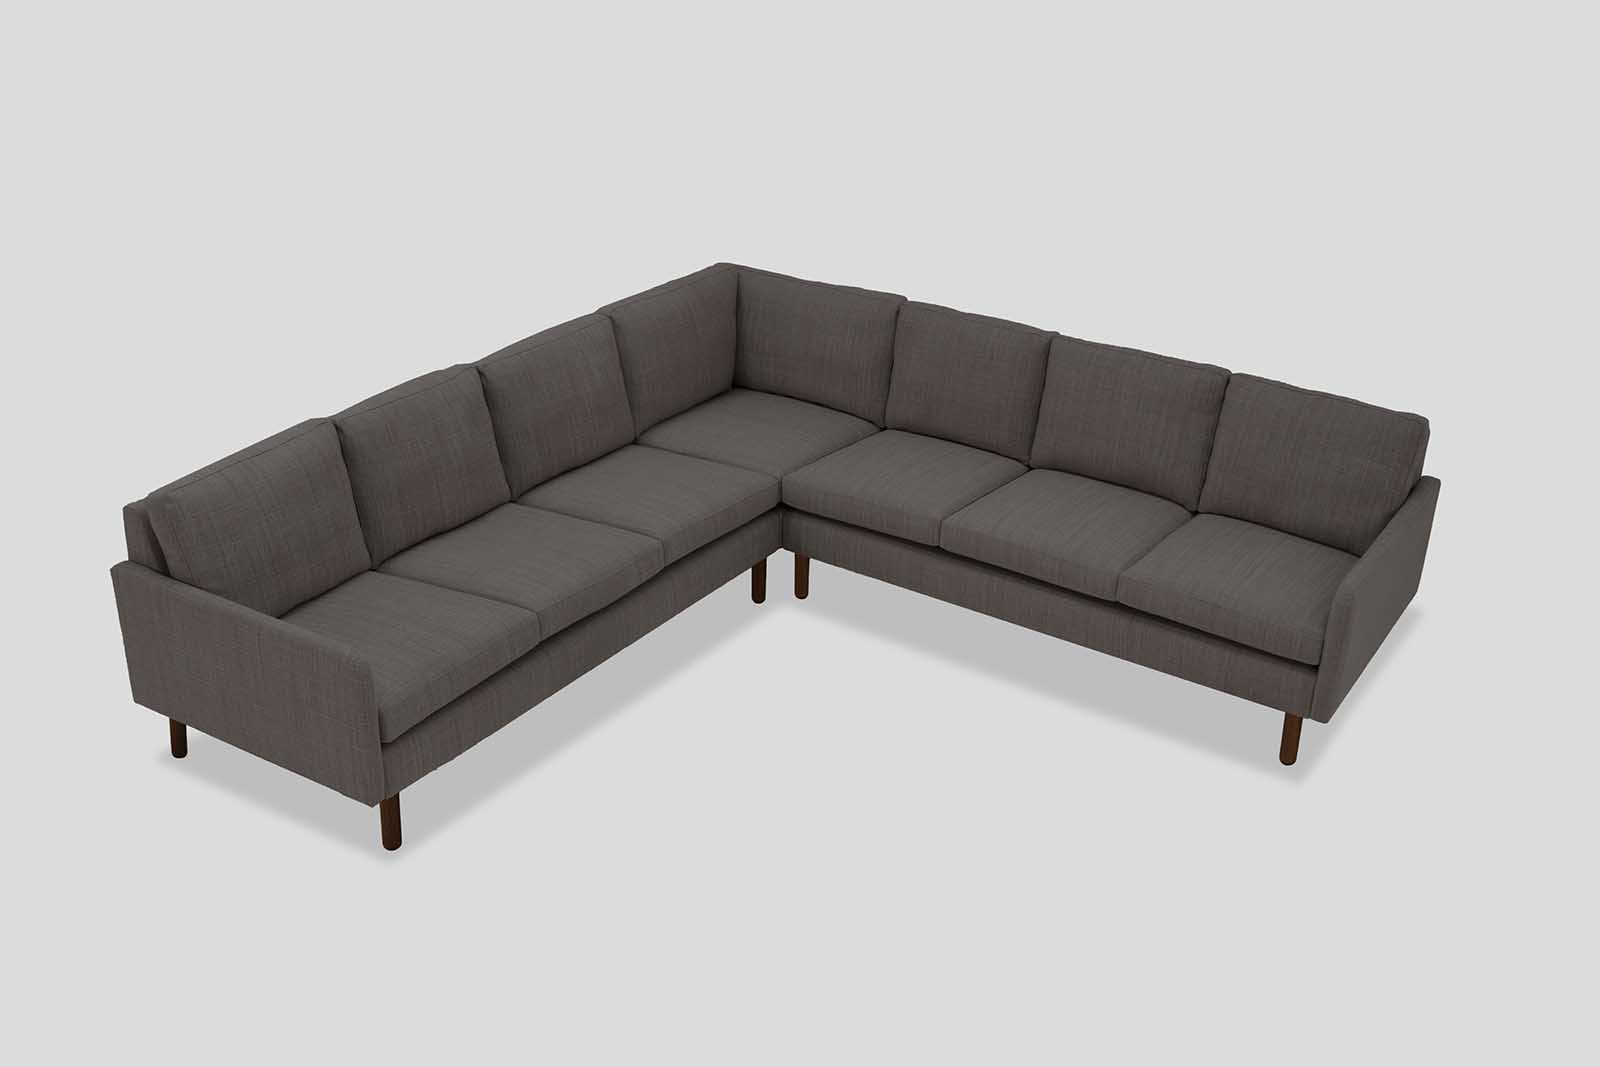 HB03-large-corner-sofa-seal-3x3-overhead-treacle